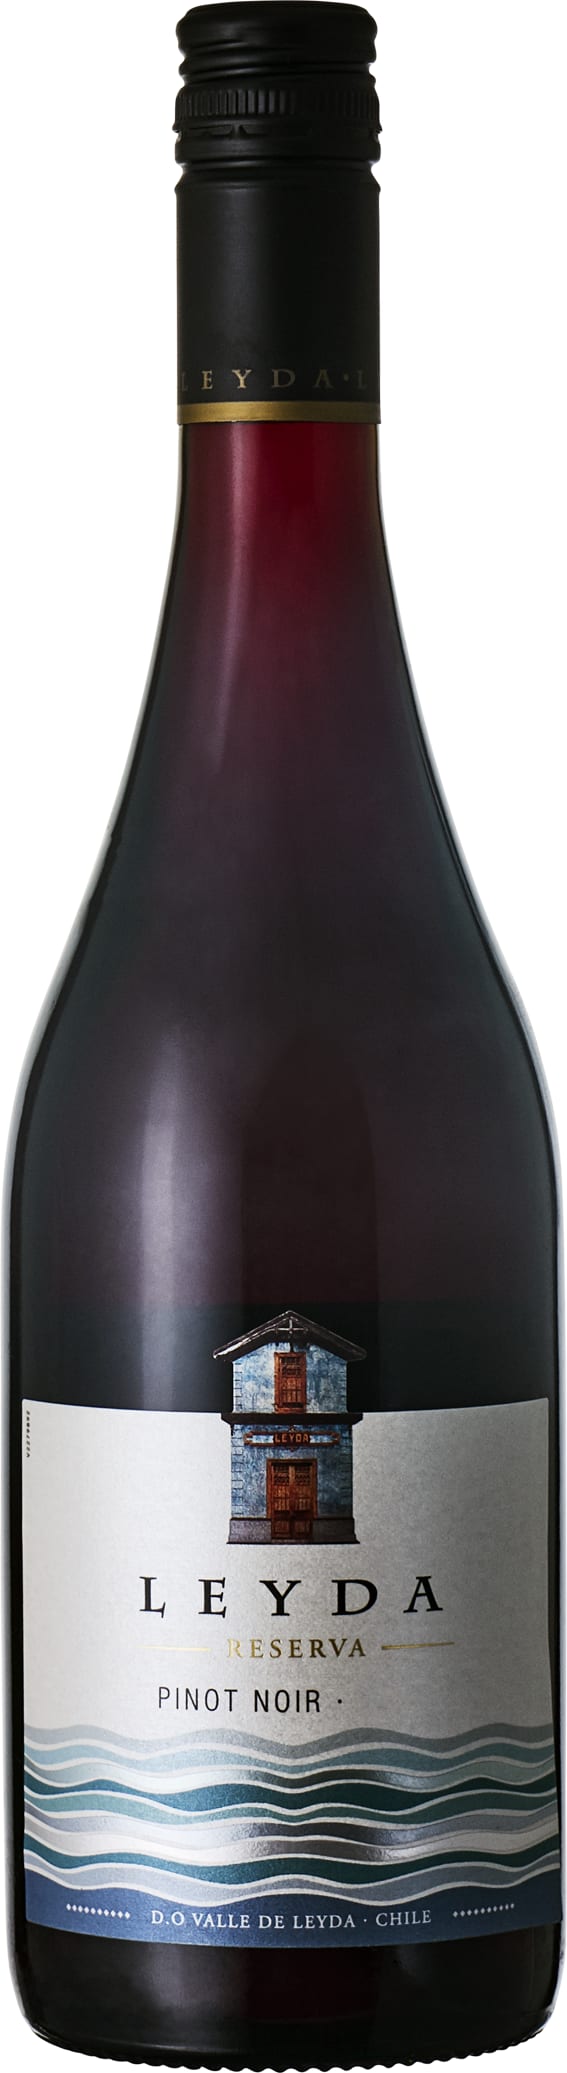 Pinot Noir Reserva Retail 21 Leyda 75cl - Buy Vina Leyda Wines from GREAT WINES DIRECT wine shop